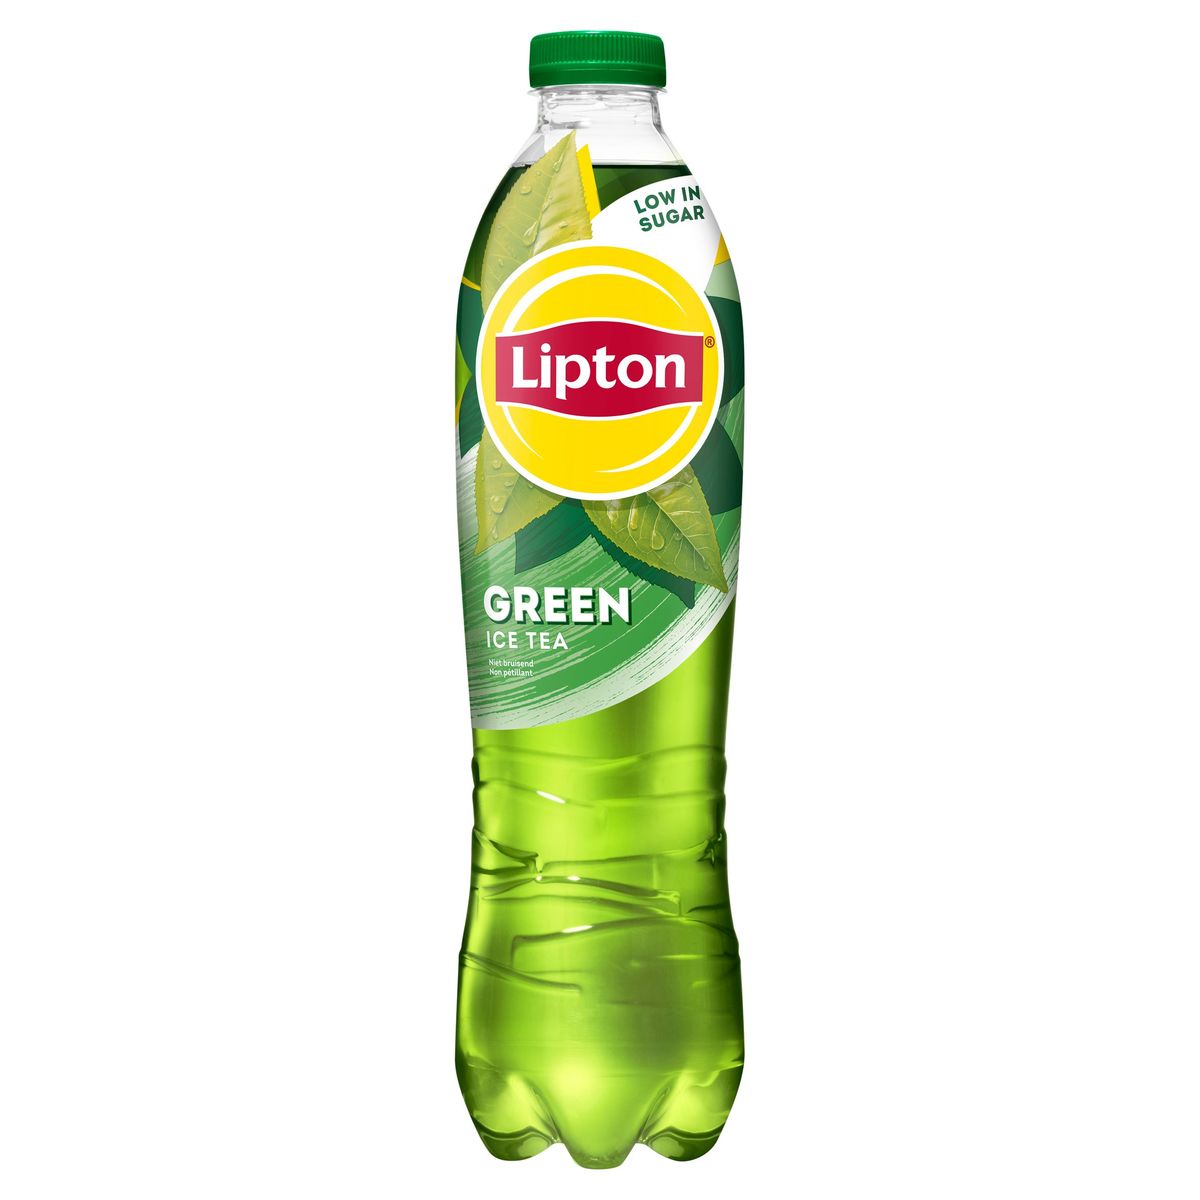 Lipton Ice Tea groene ijsthee Faible en sucre 1.5 L